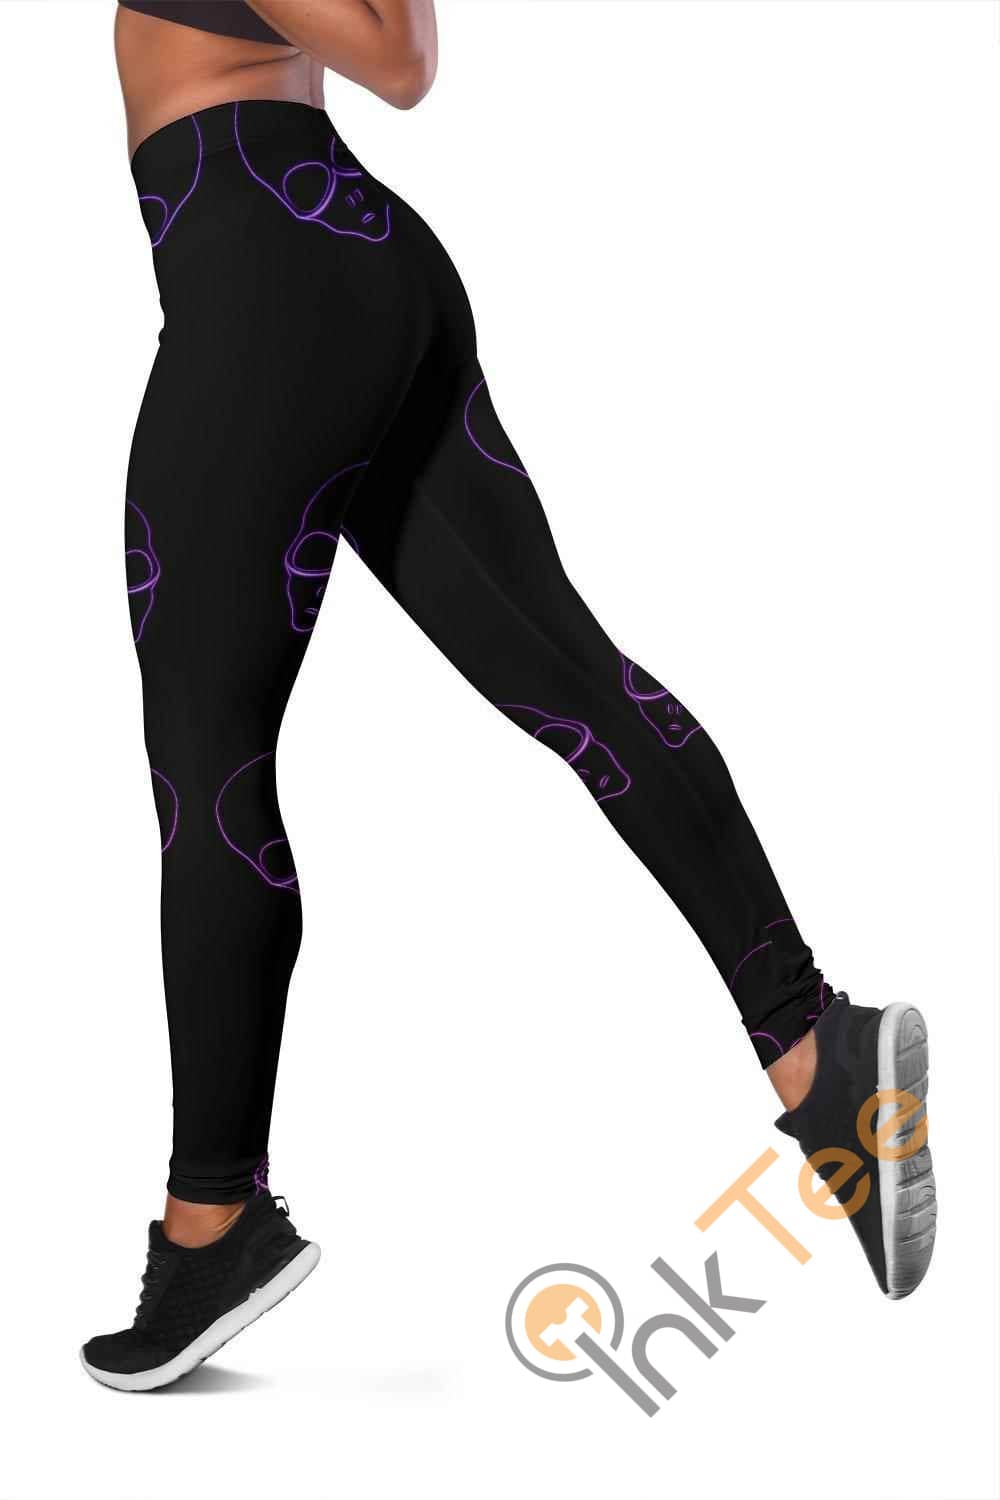 Inktee Store - Space Aliens 3D All Over Print For Yoga Fitness Women'S Leggings Image